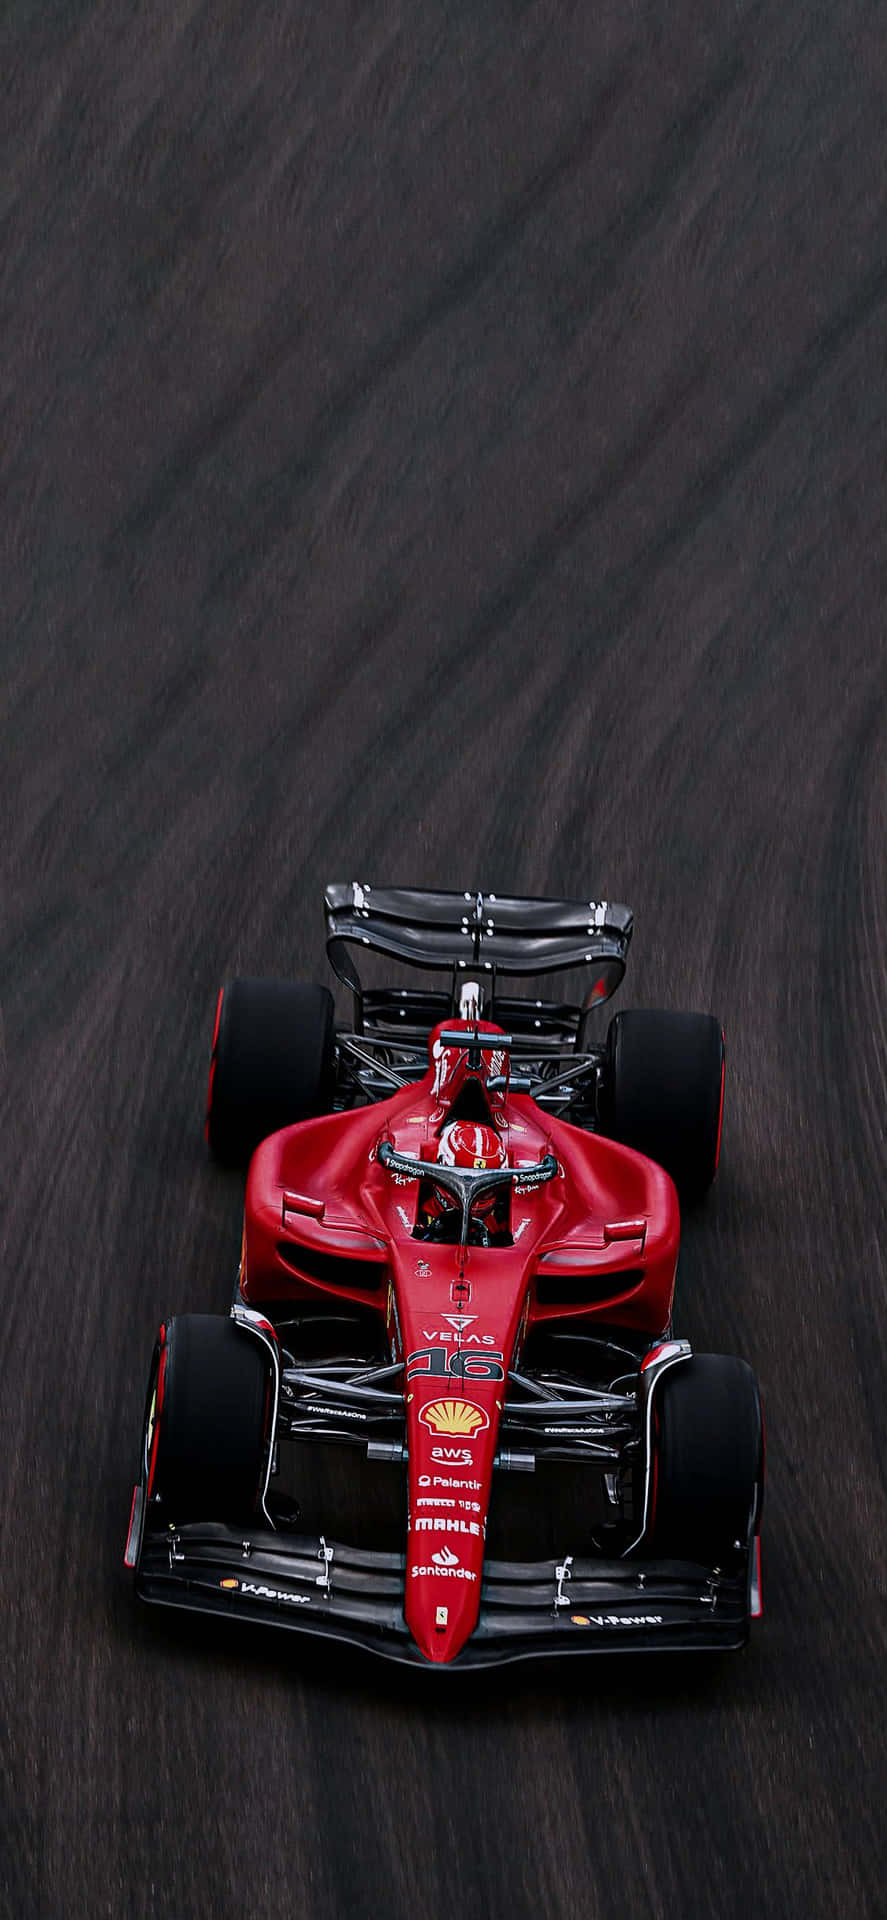 A Red Racing Car Wallpaper